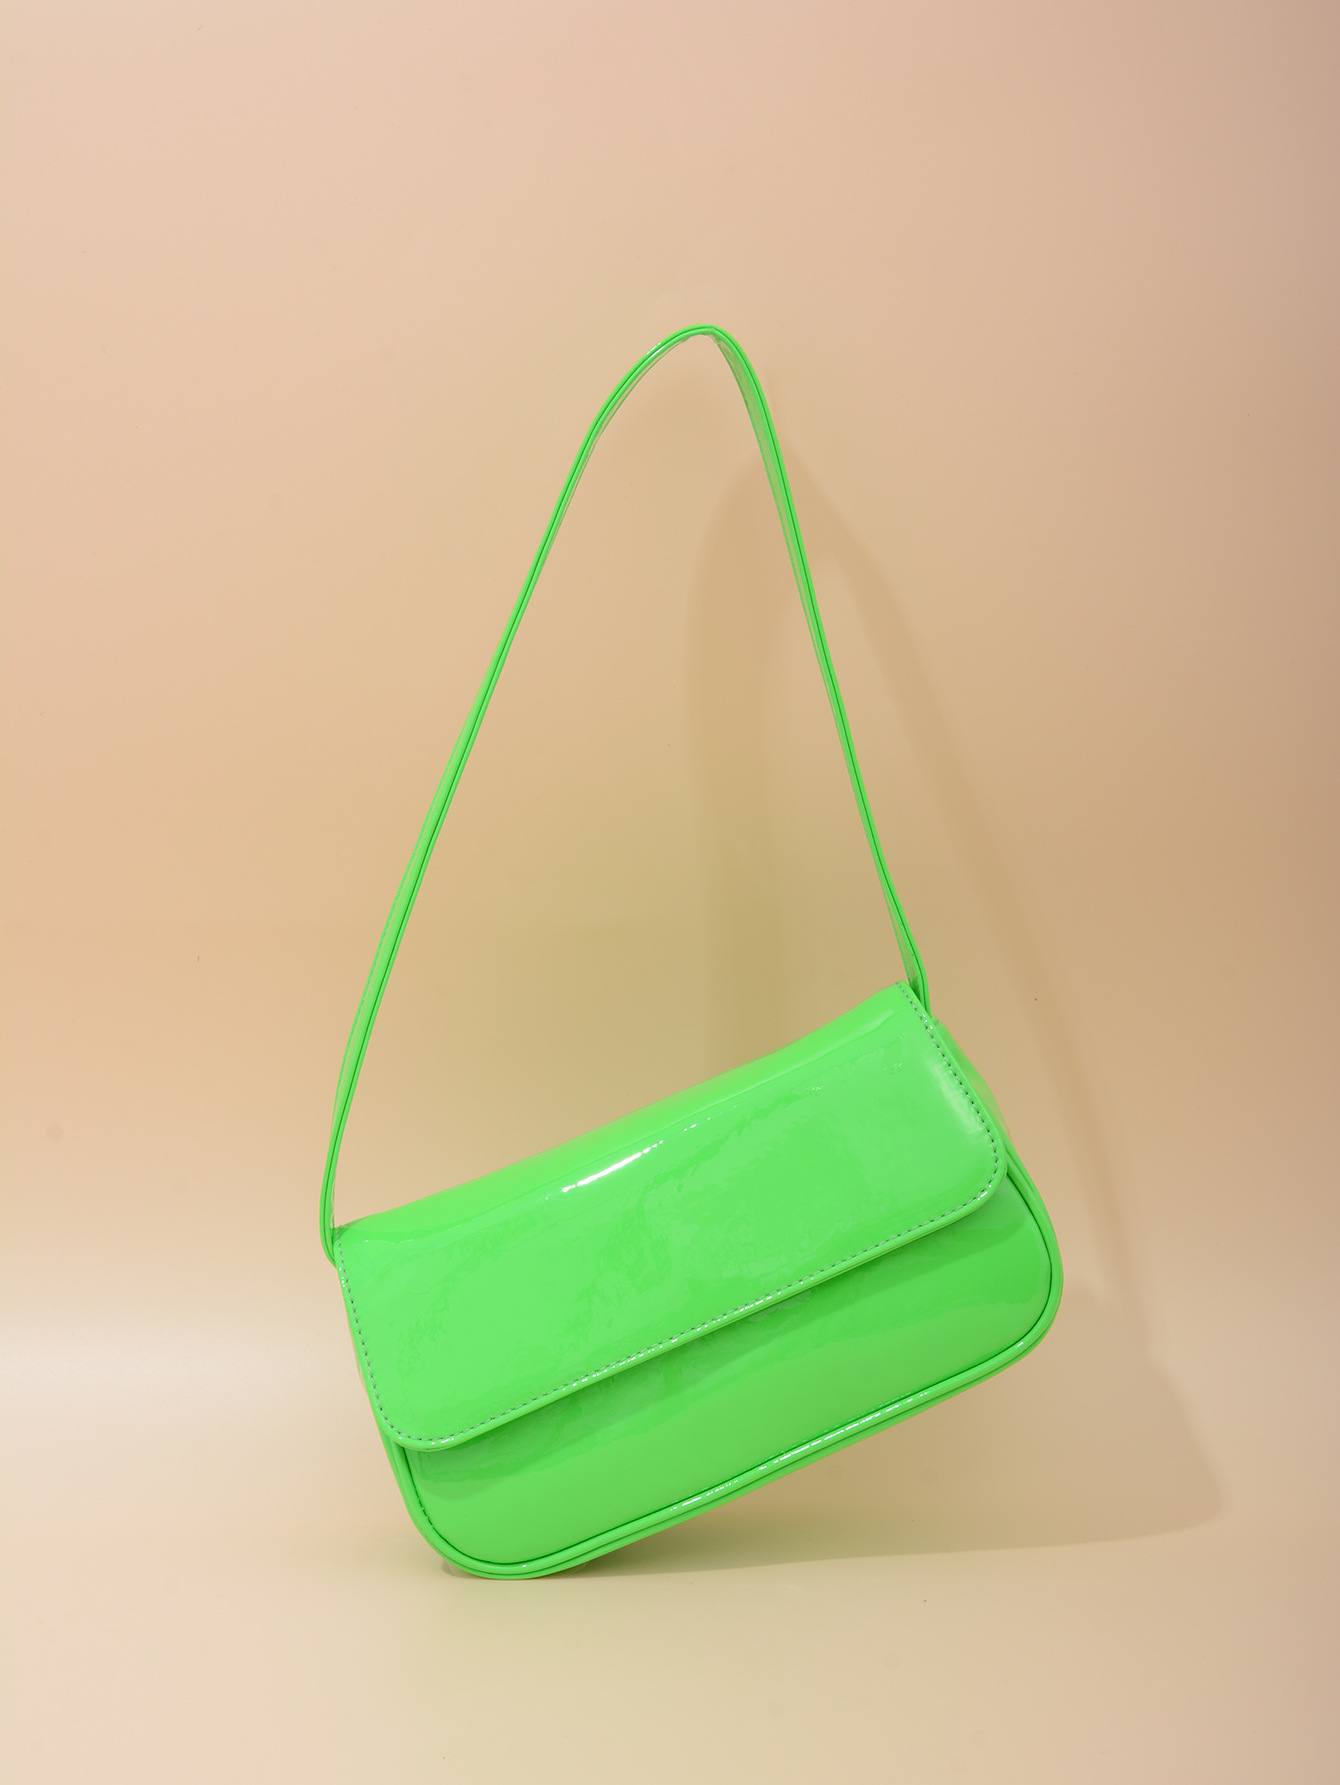 Basic Patent Leather Solid Color Baguette Bag